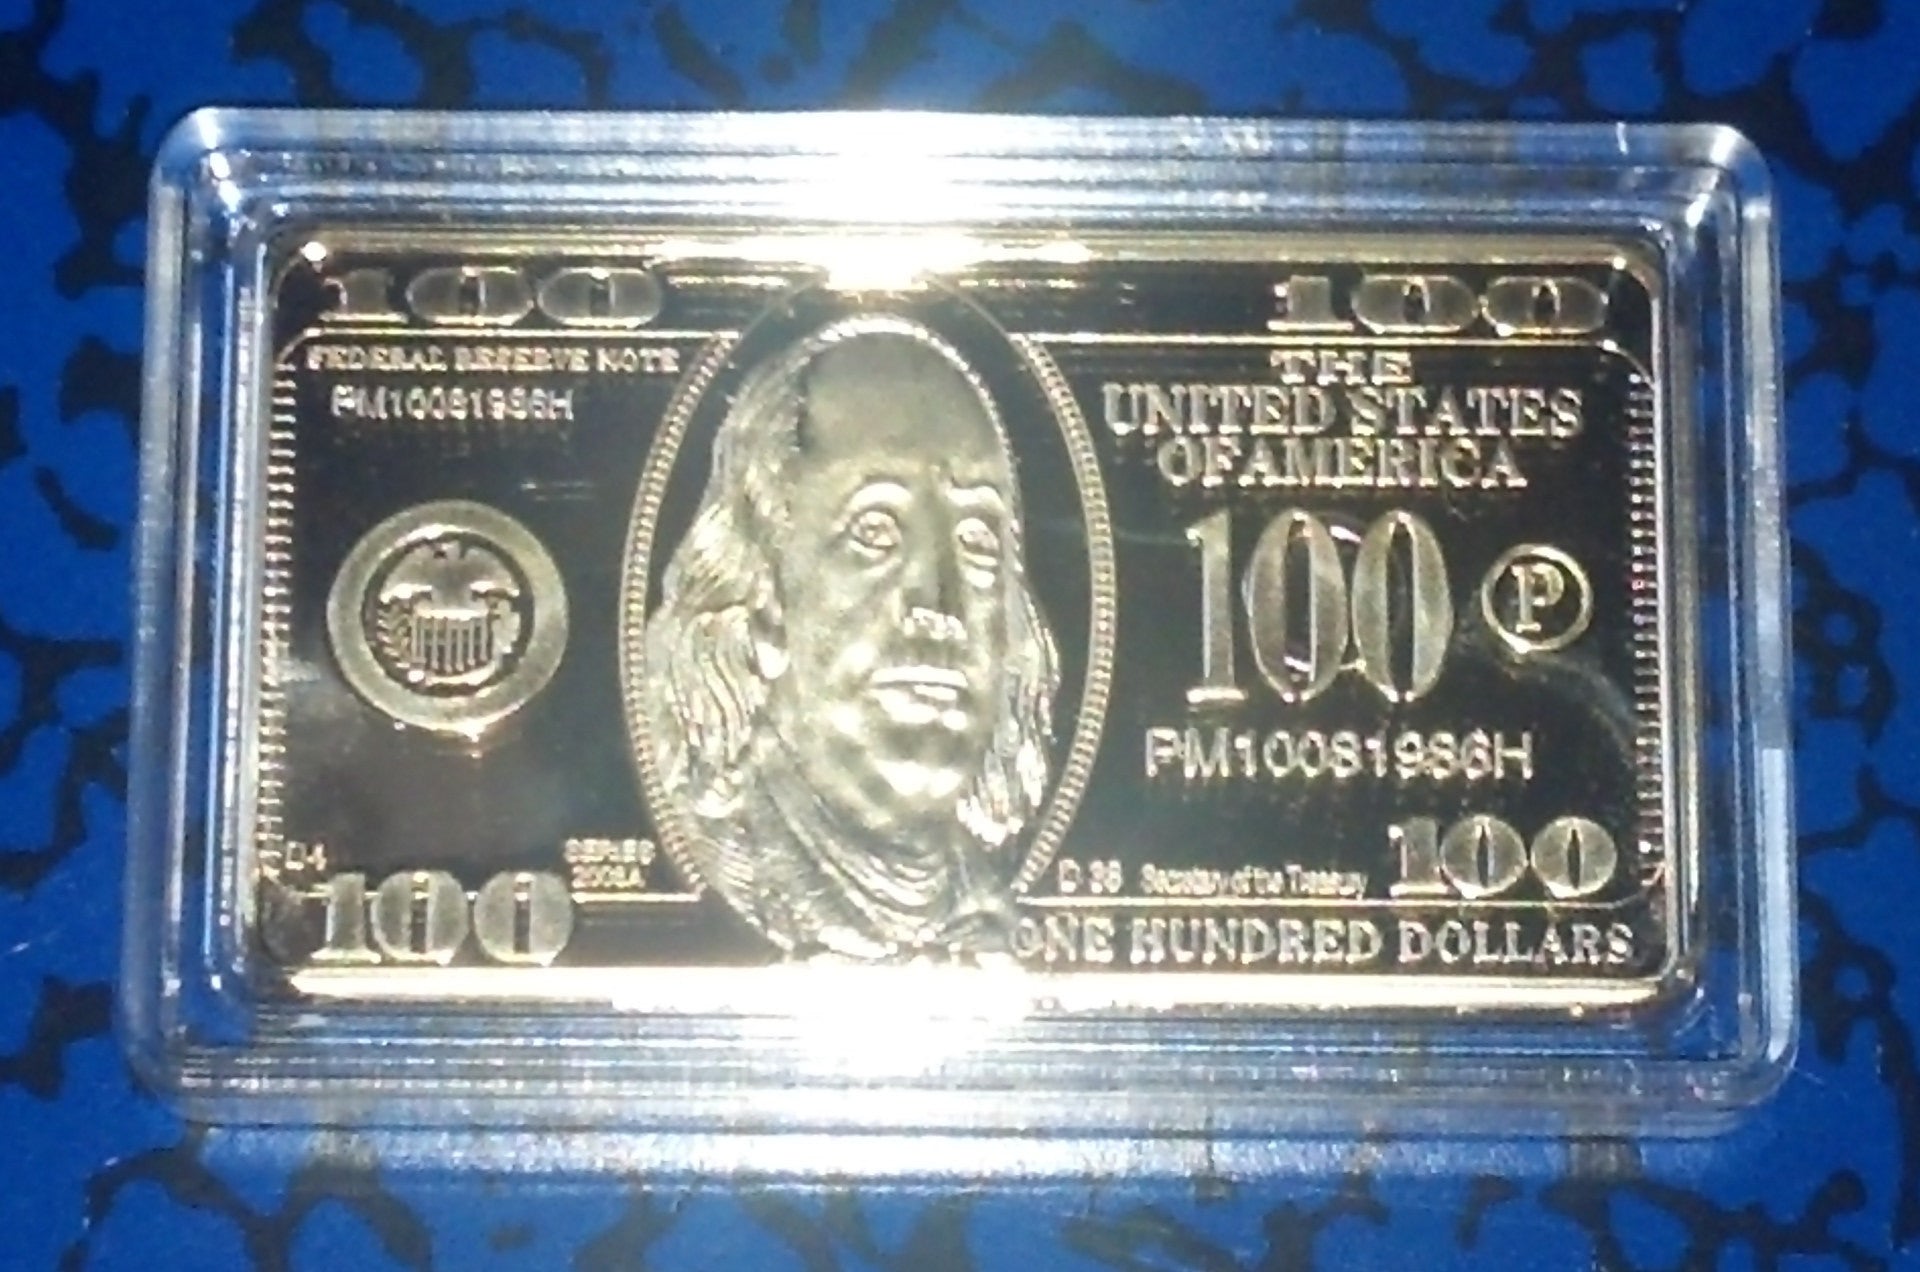 USA Franklin $100 Bill 24K Gold 1 oz. bar